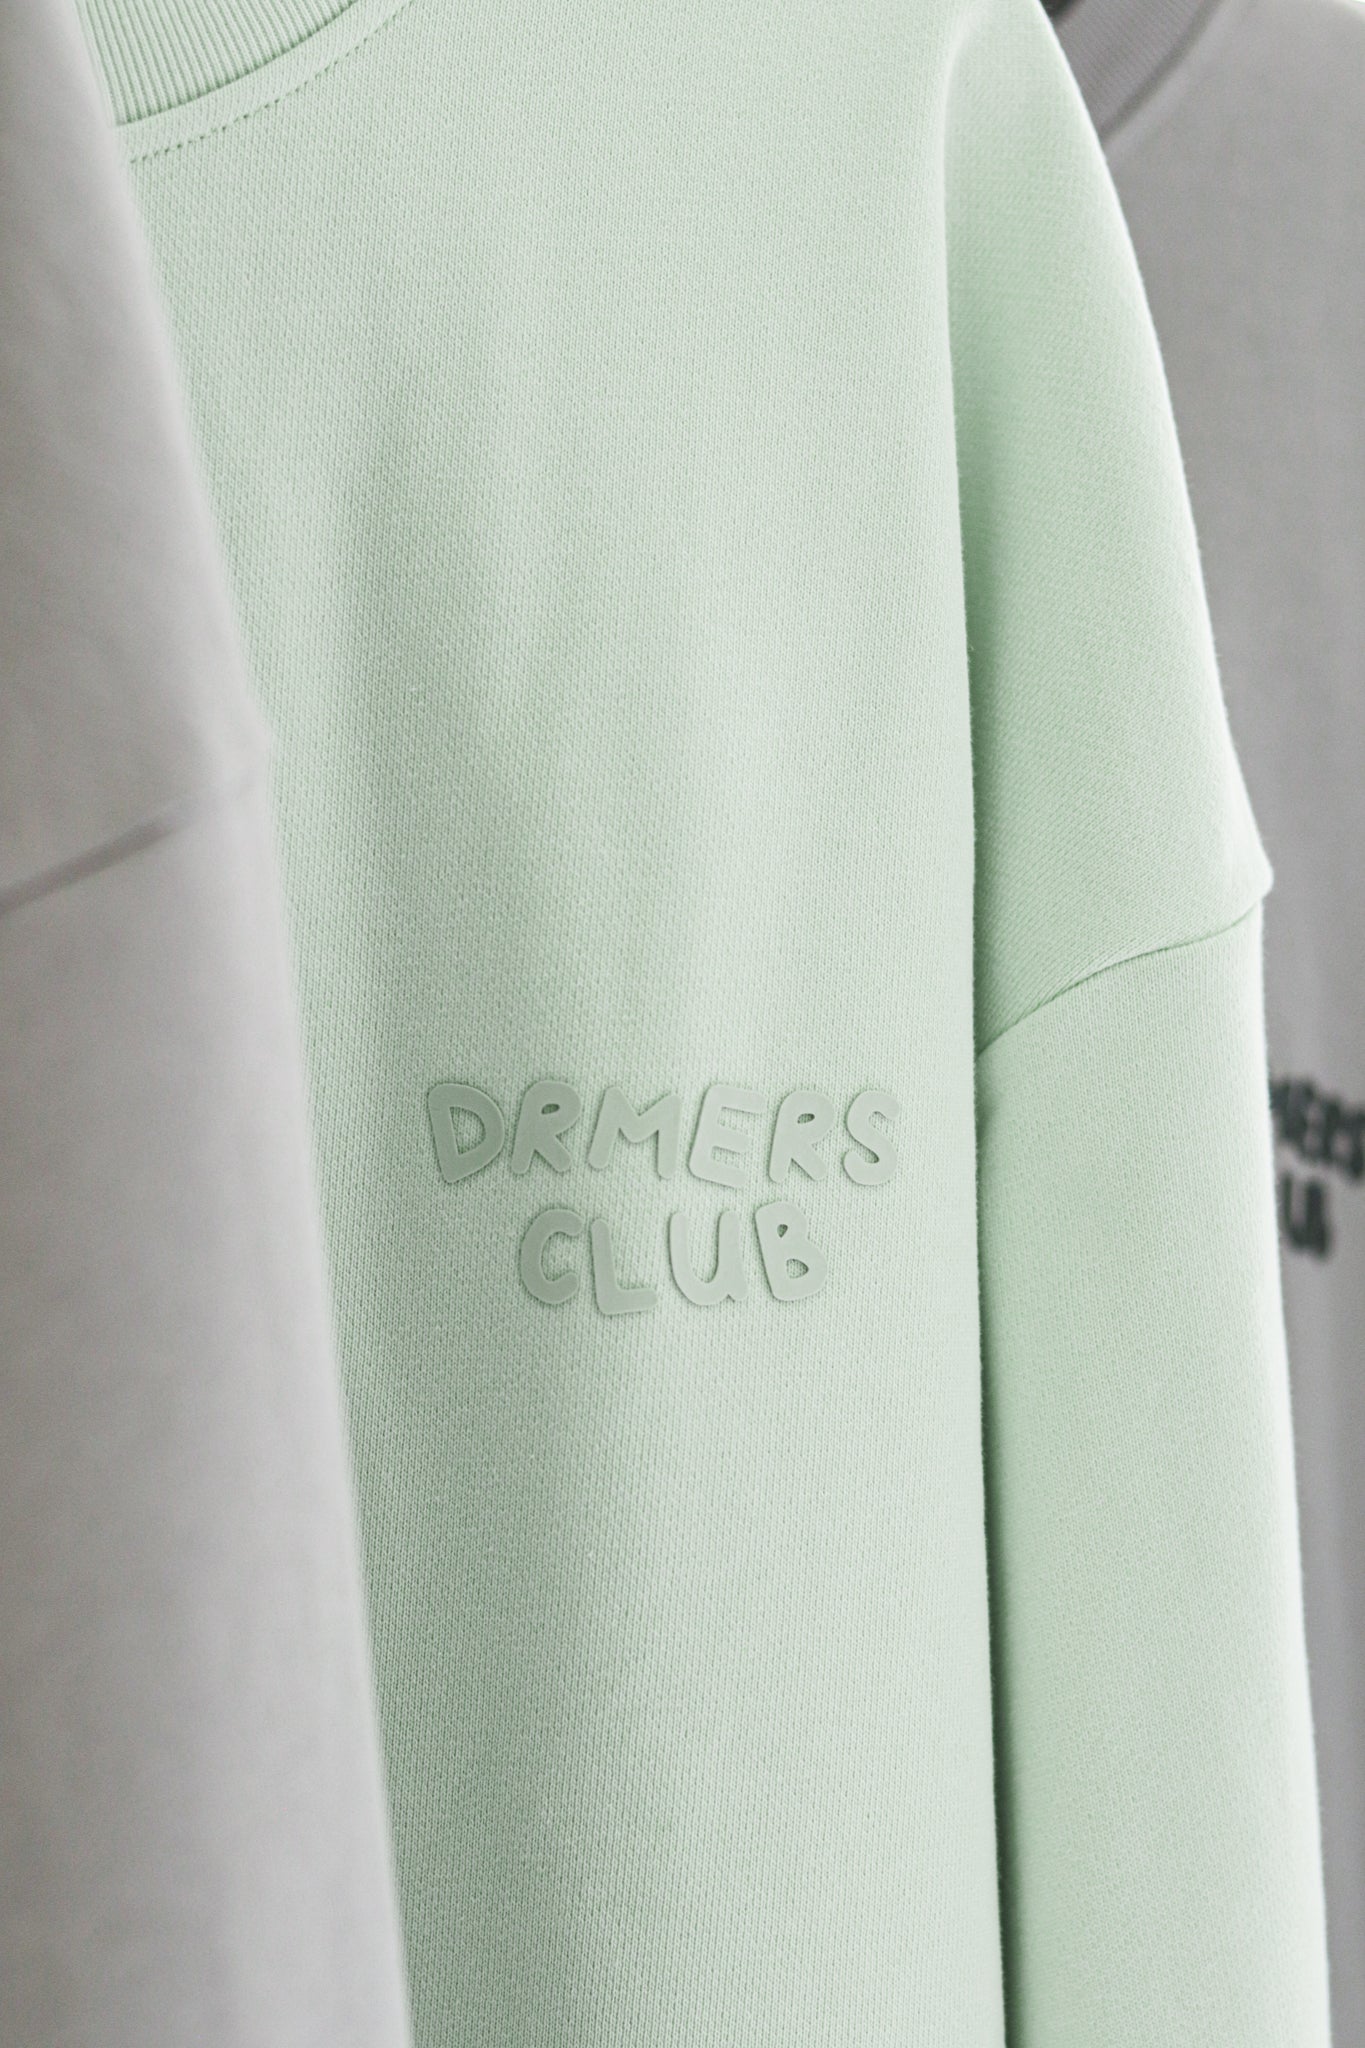 drmers club basics hoodie - matcha cream